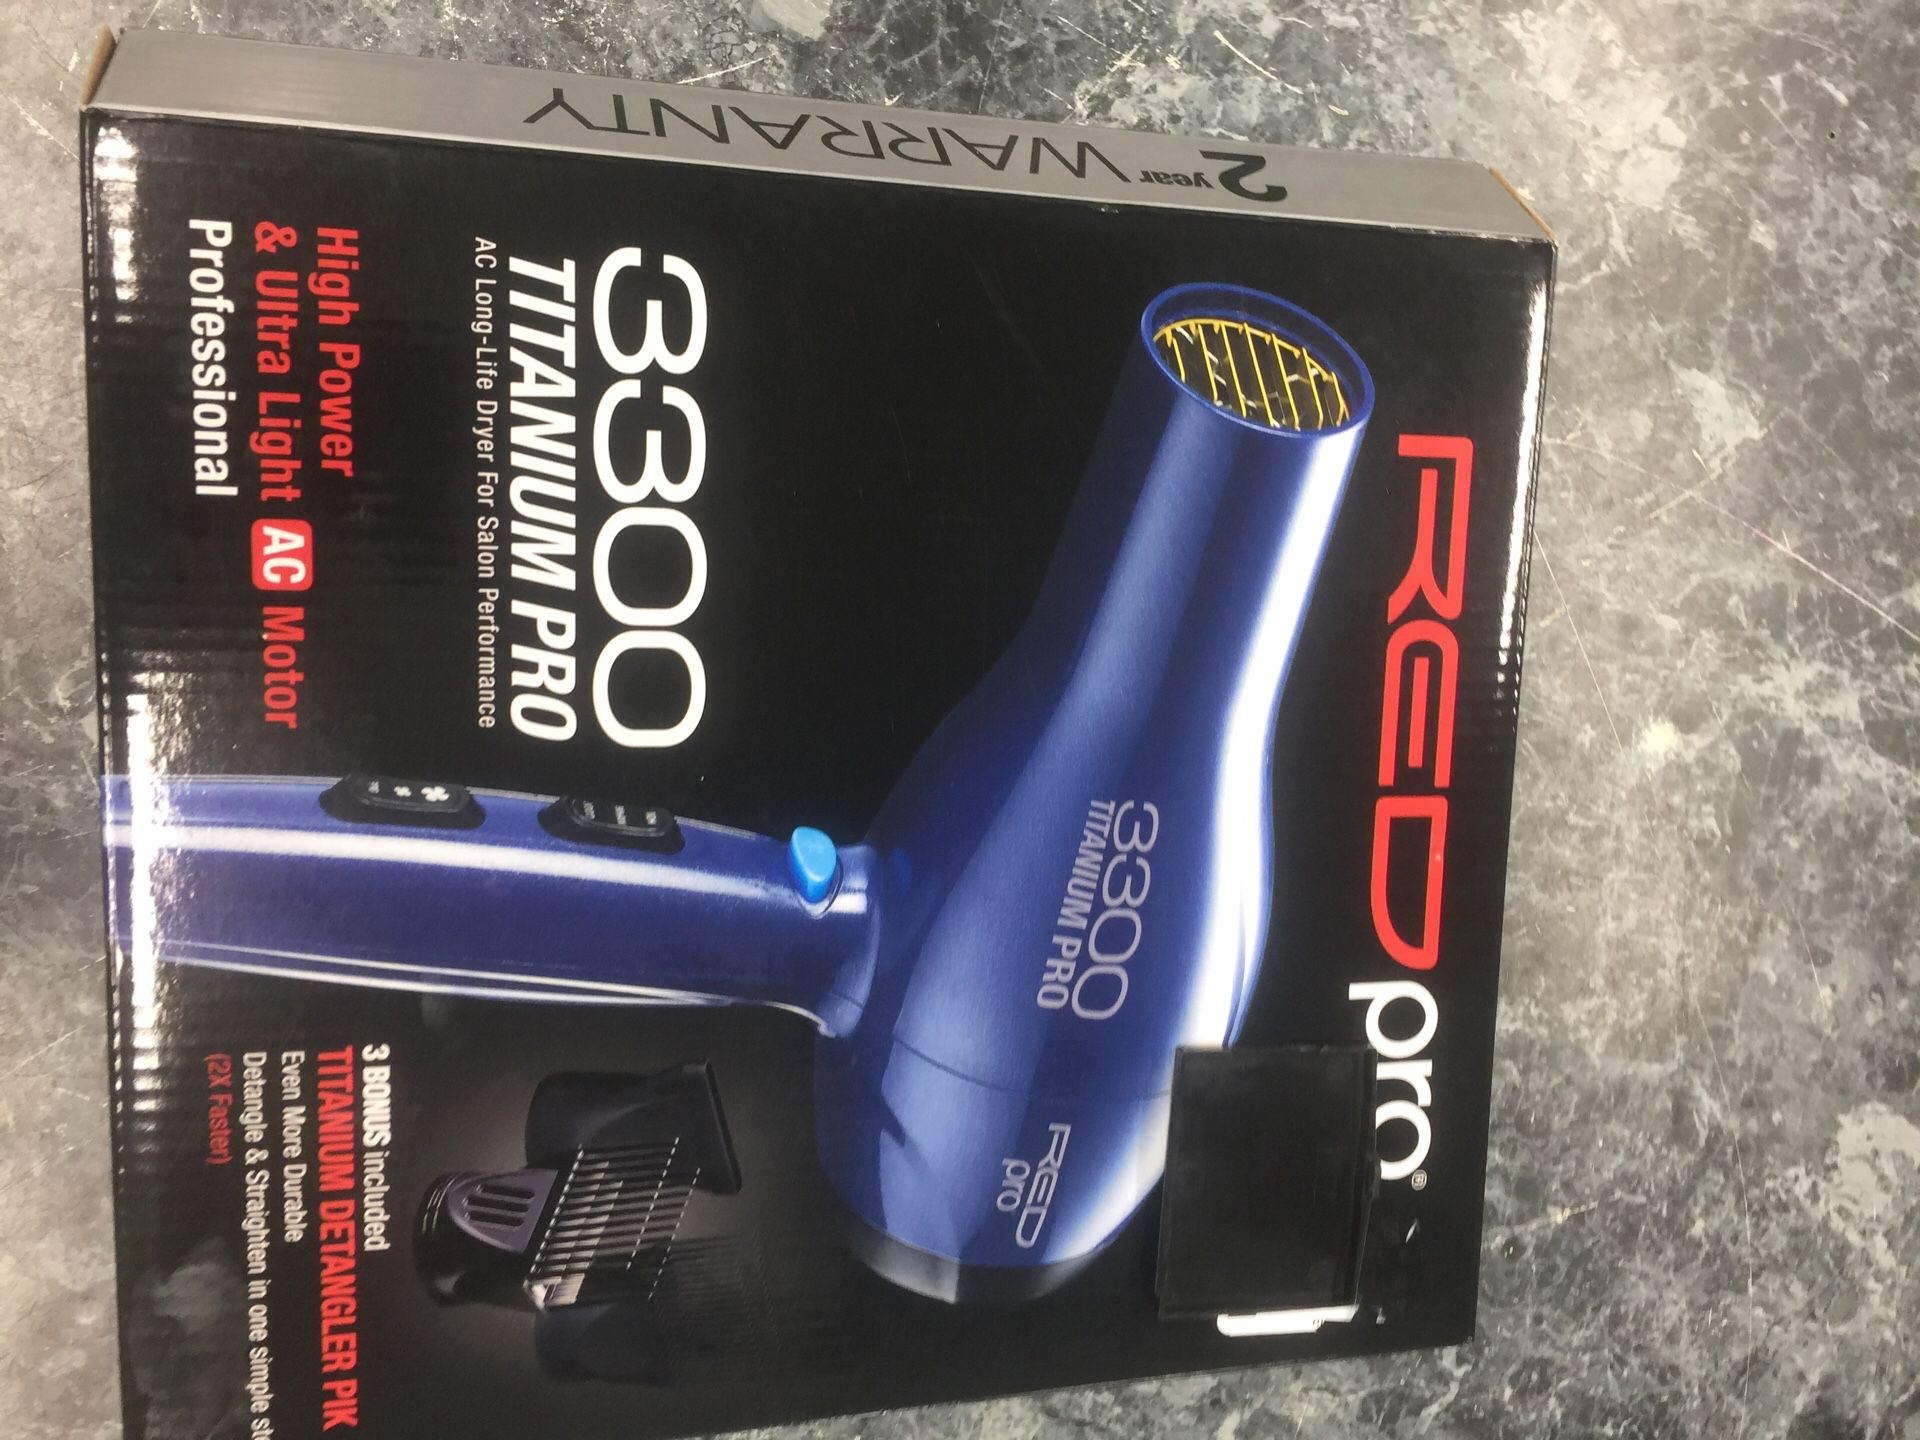 Red pro 3300 titanium pro hair dryer